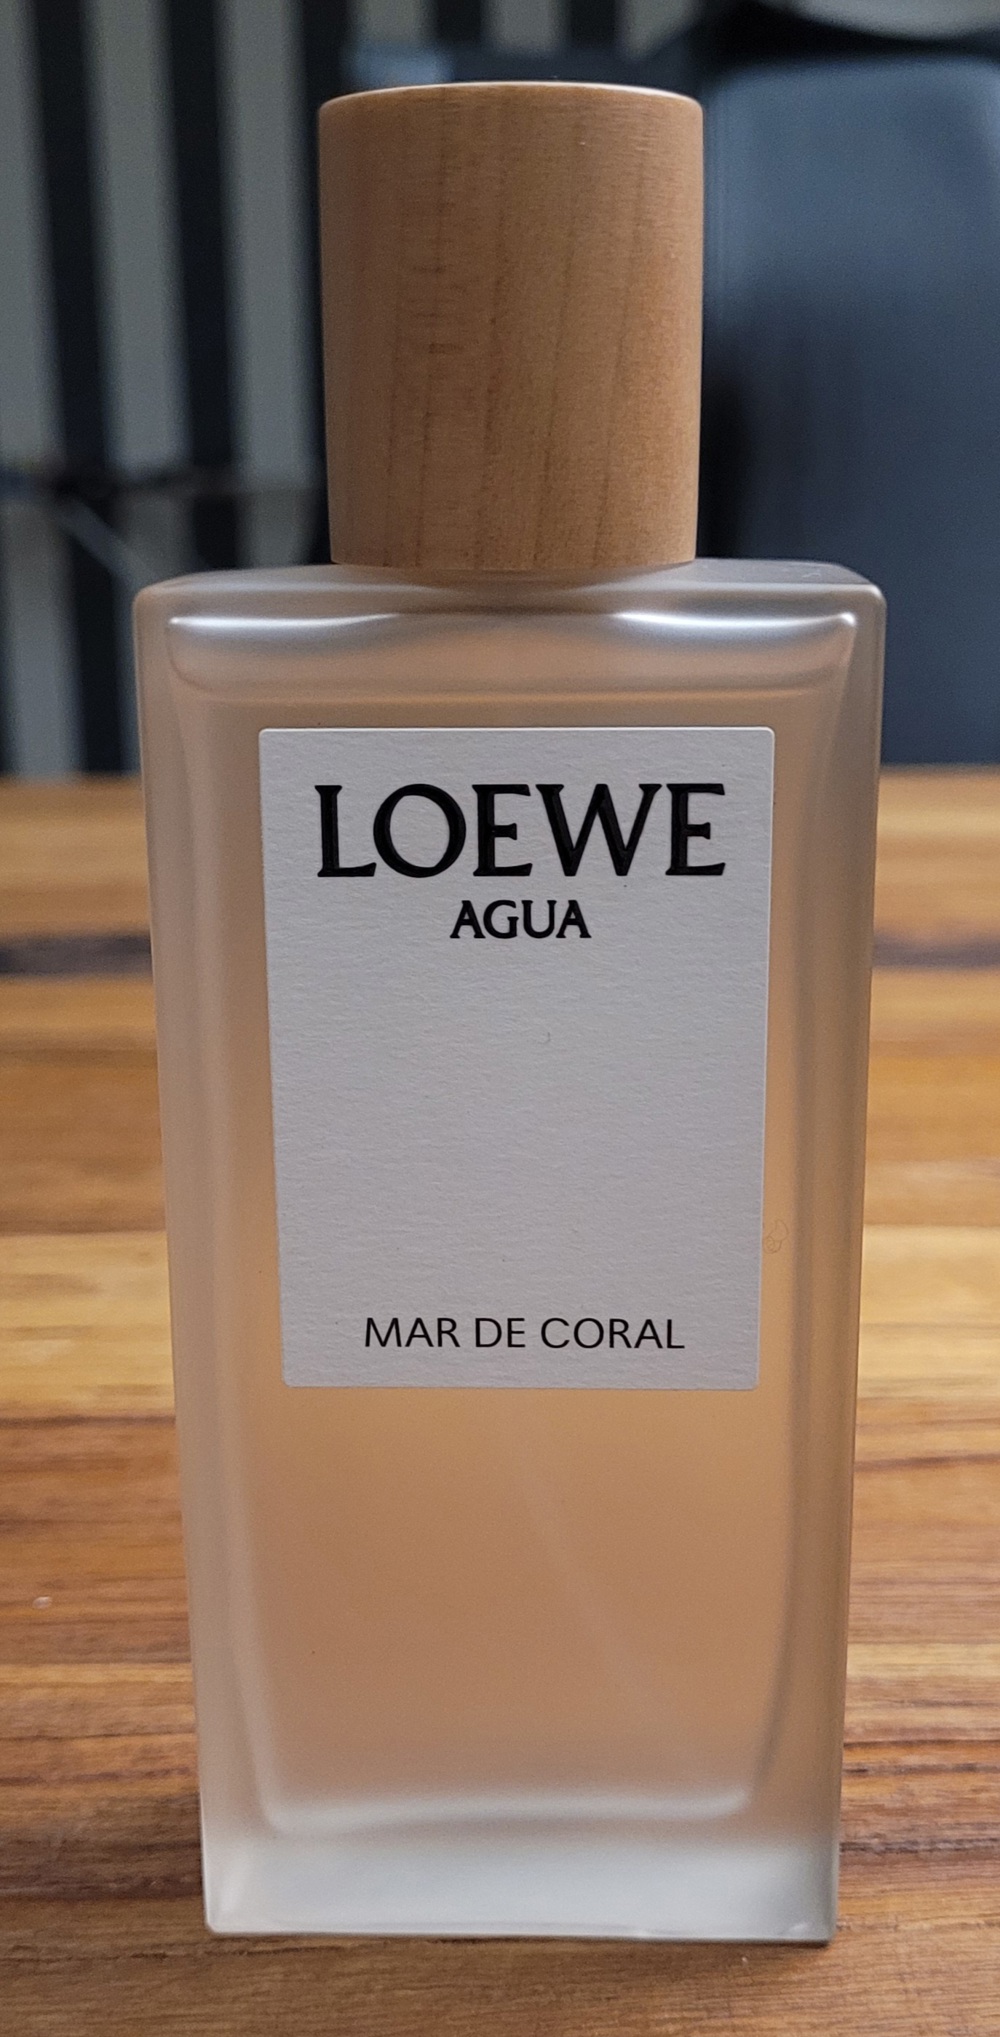 LOEWE Agua "Mar de Coral", Edt 100ml